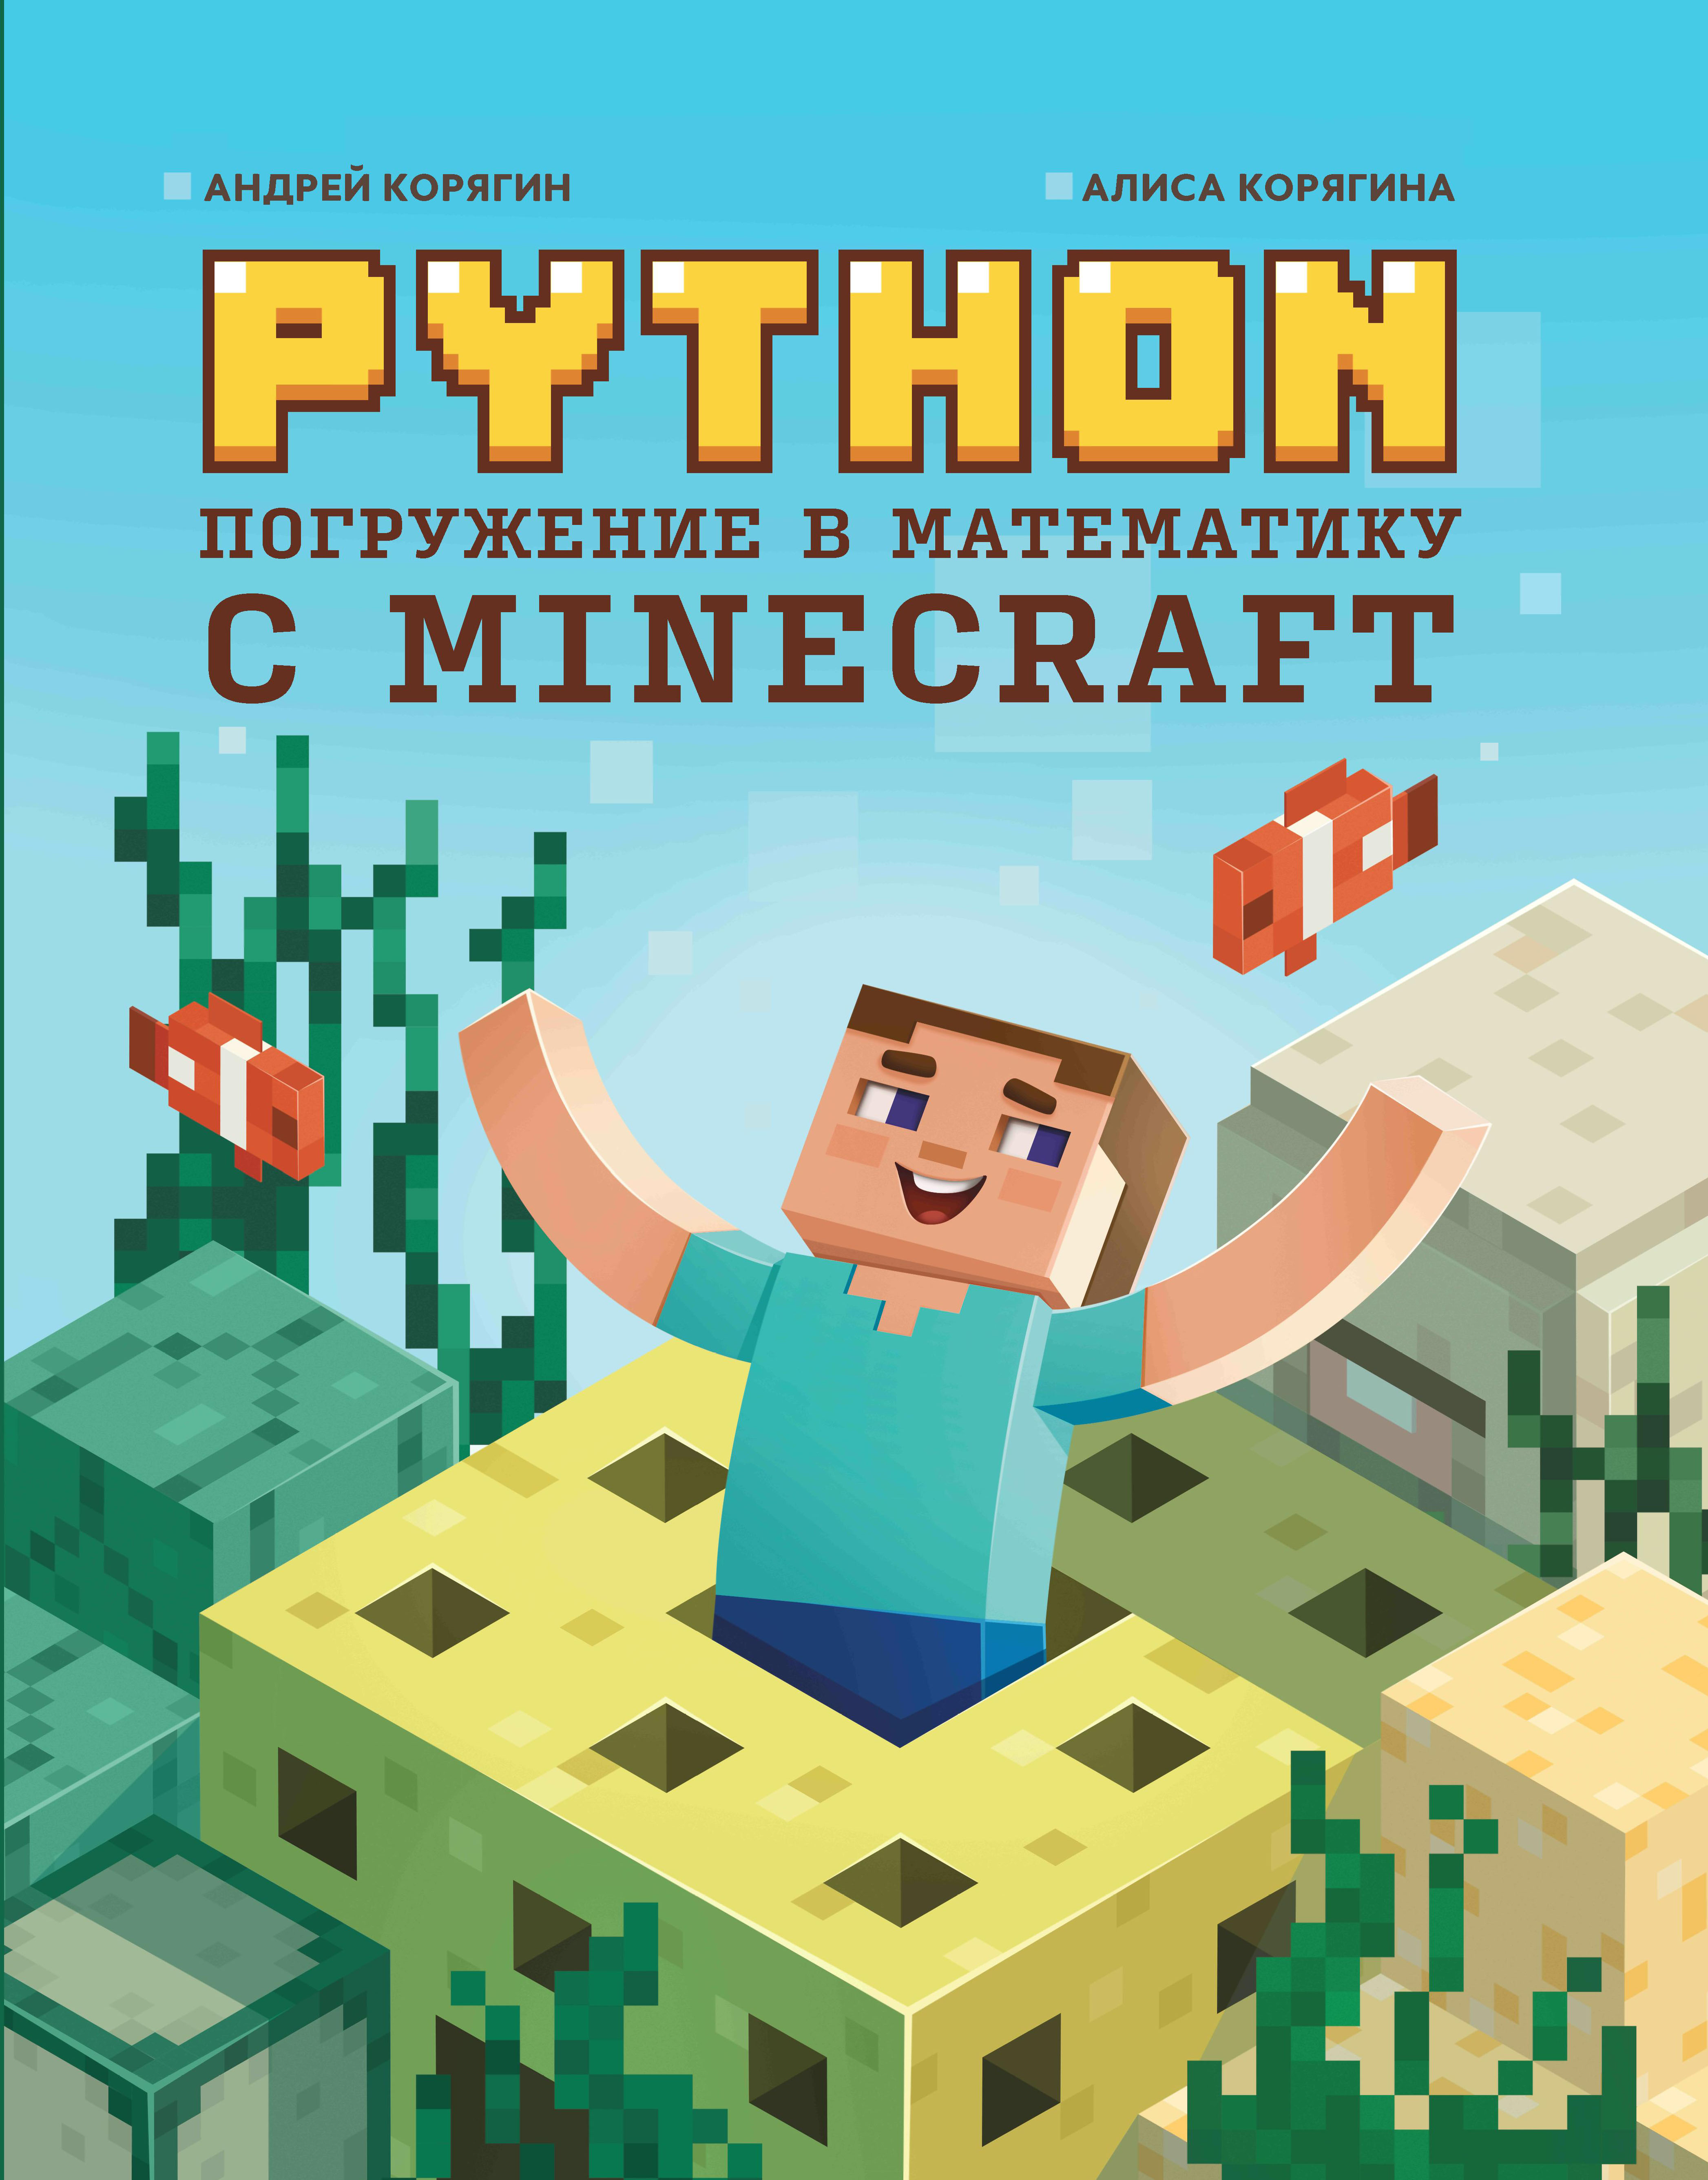 Python.     Minecraft